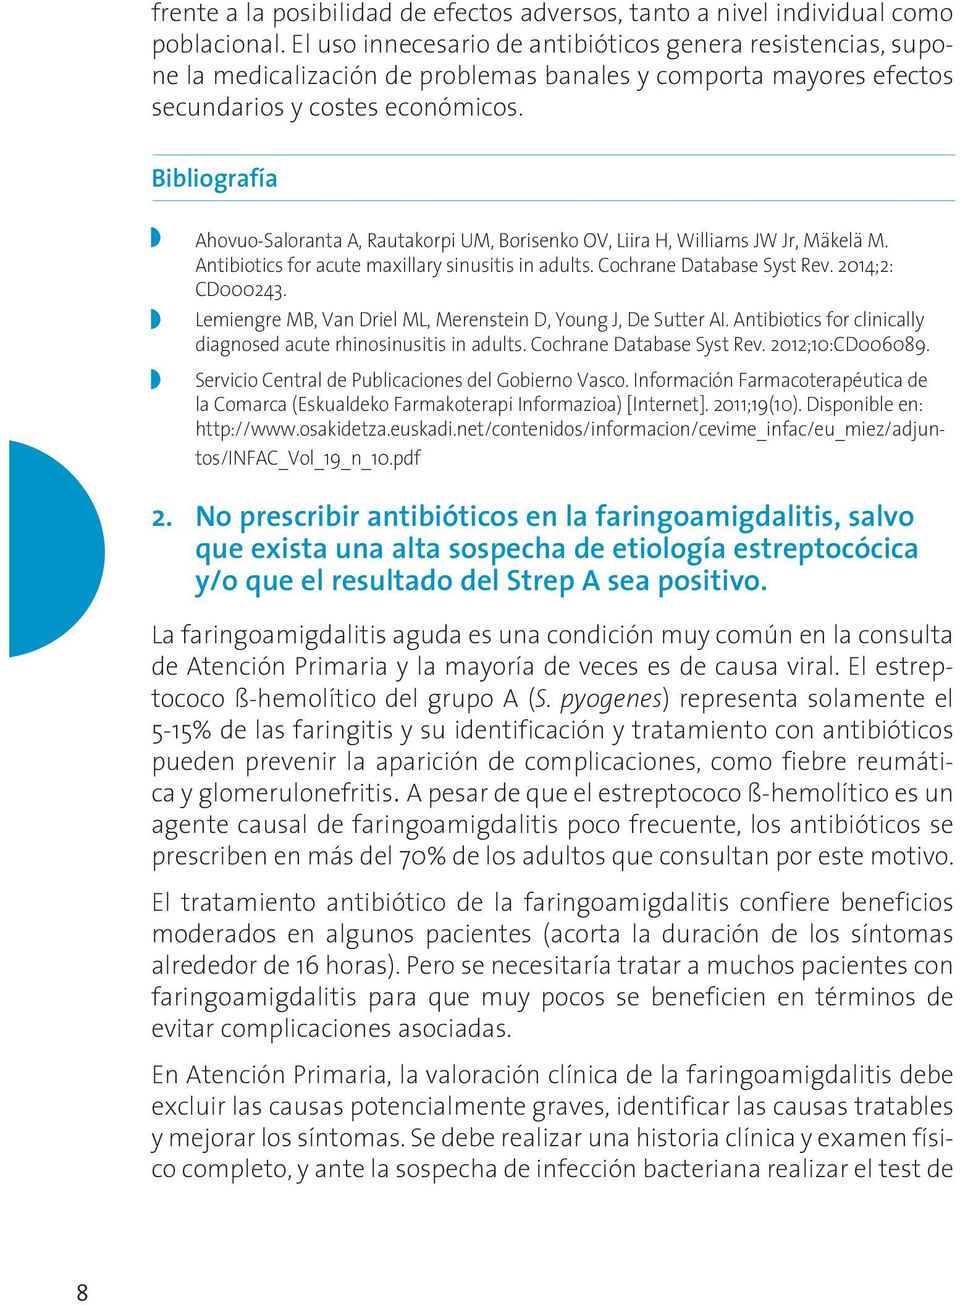 Bibliografía Ahovuo-Saloranta A, Rautakorpi UM, Borisenko OV, Liira H, Williams JW Jr, Mäkelä M. Antibiotics for acute maxillary sinusitis in adults. Cochrane Database Syst Rev. 2014;2: CD000243.